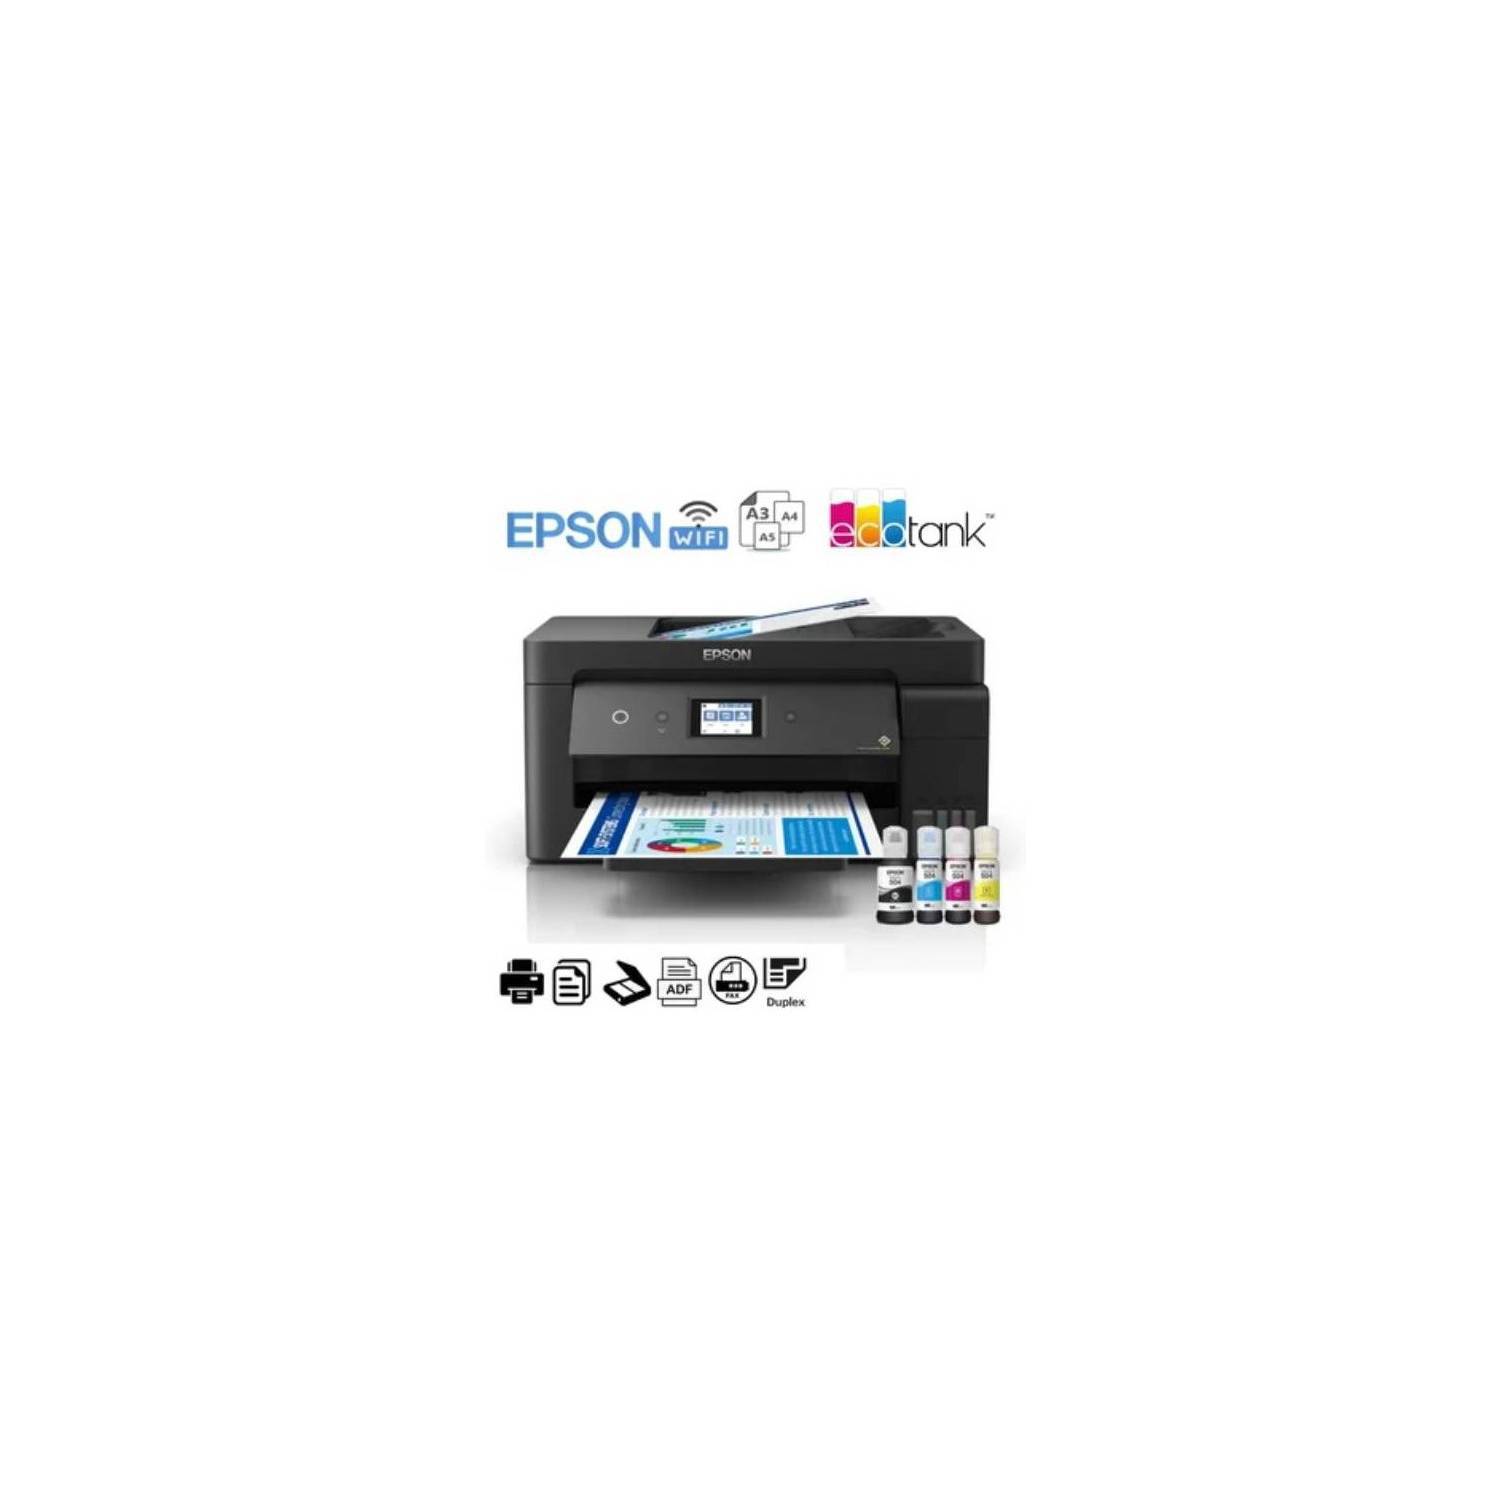 Impresora a3 multifuncional epson ecotank l14150 wifi adf dúplex